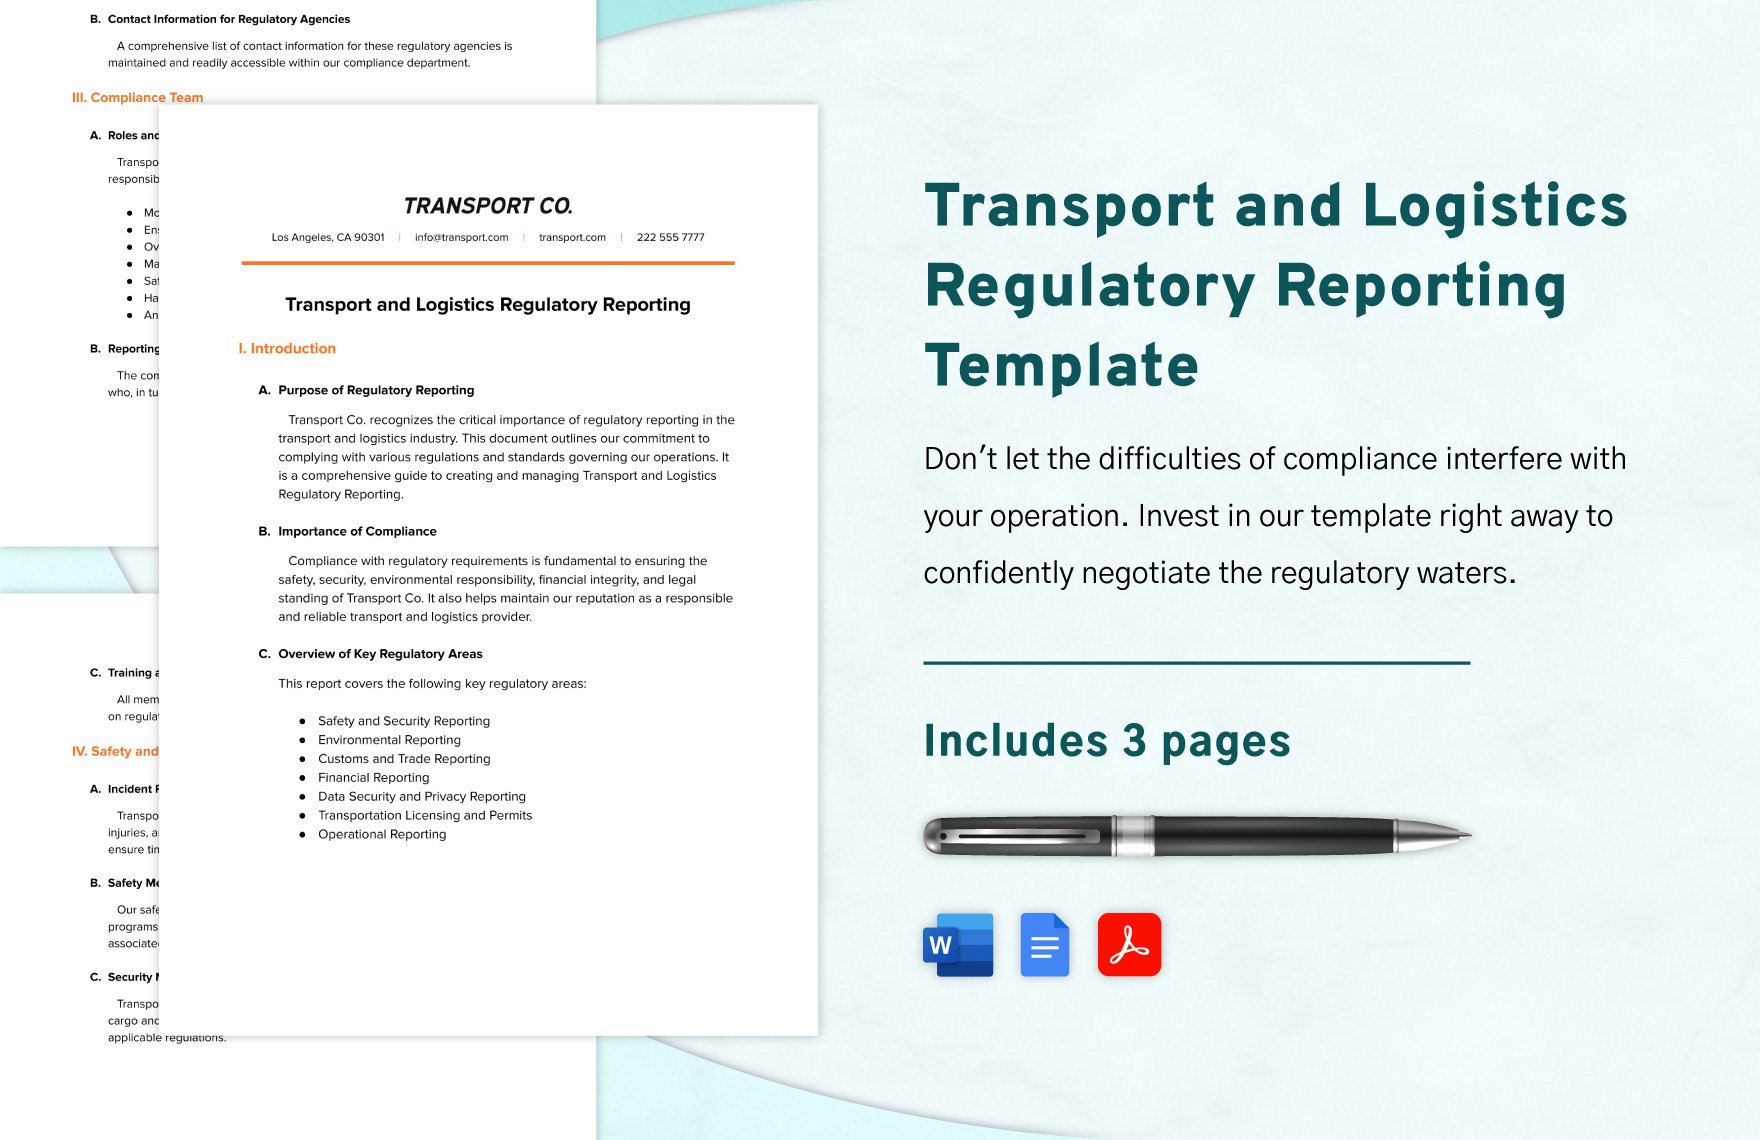 Transport and Logistics Regulatory Reporting Template